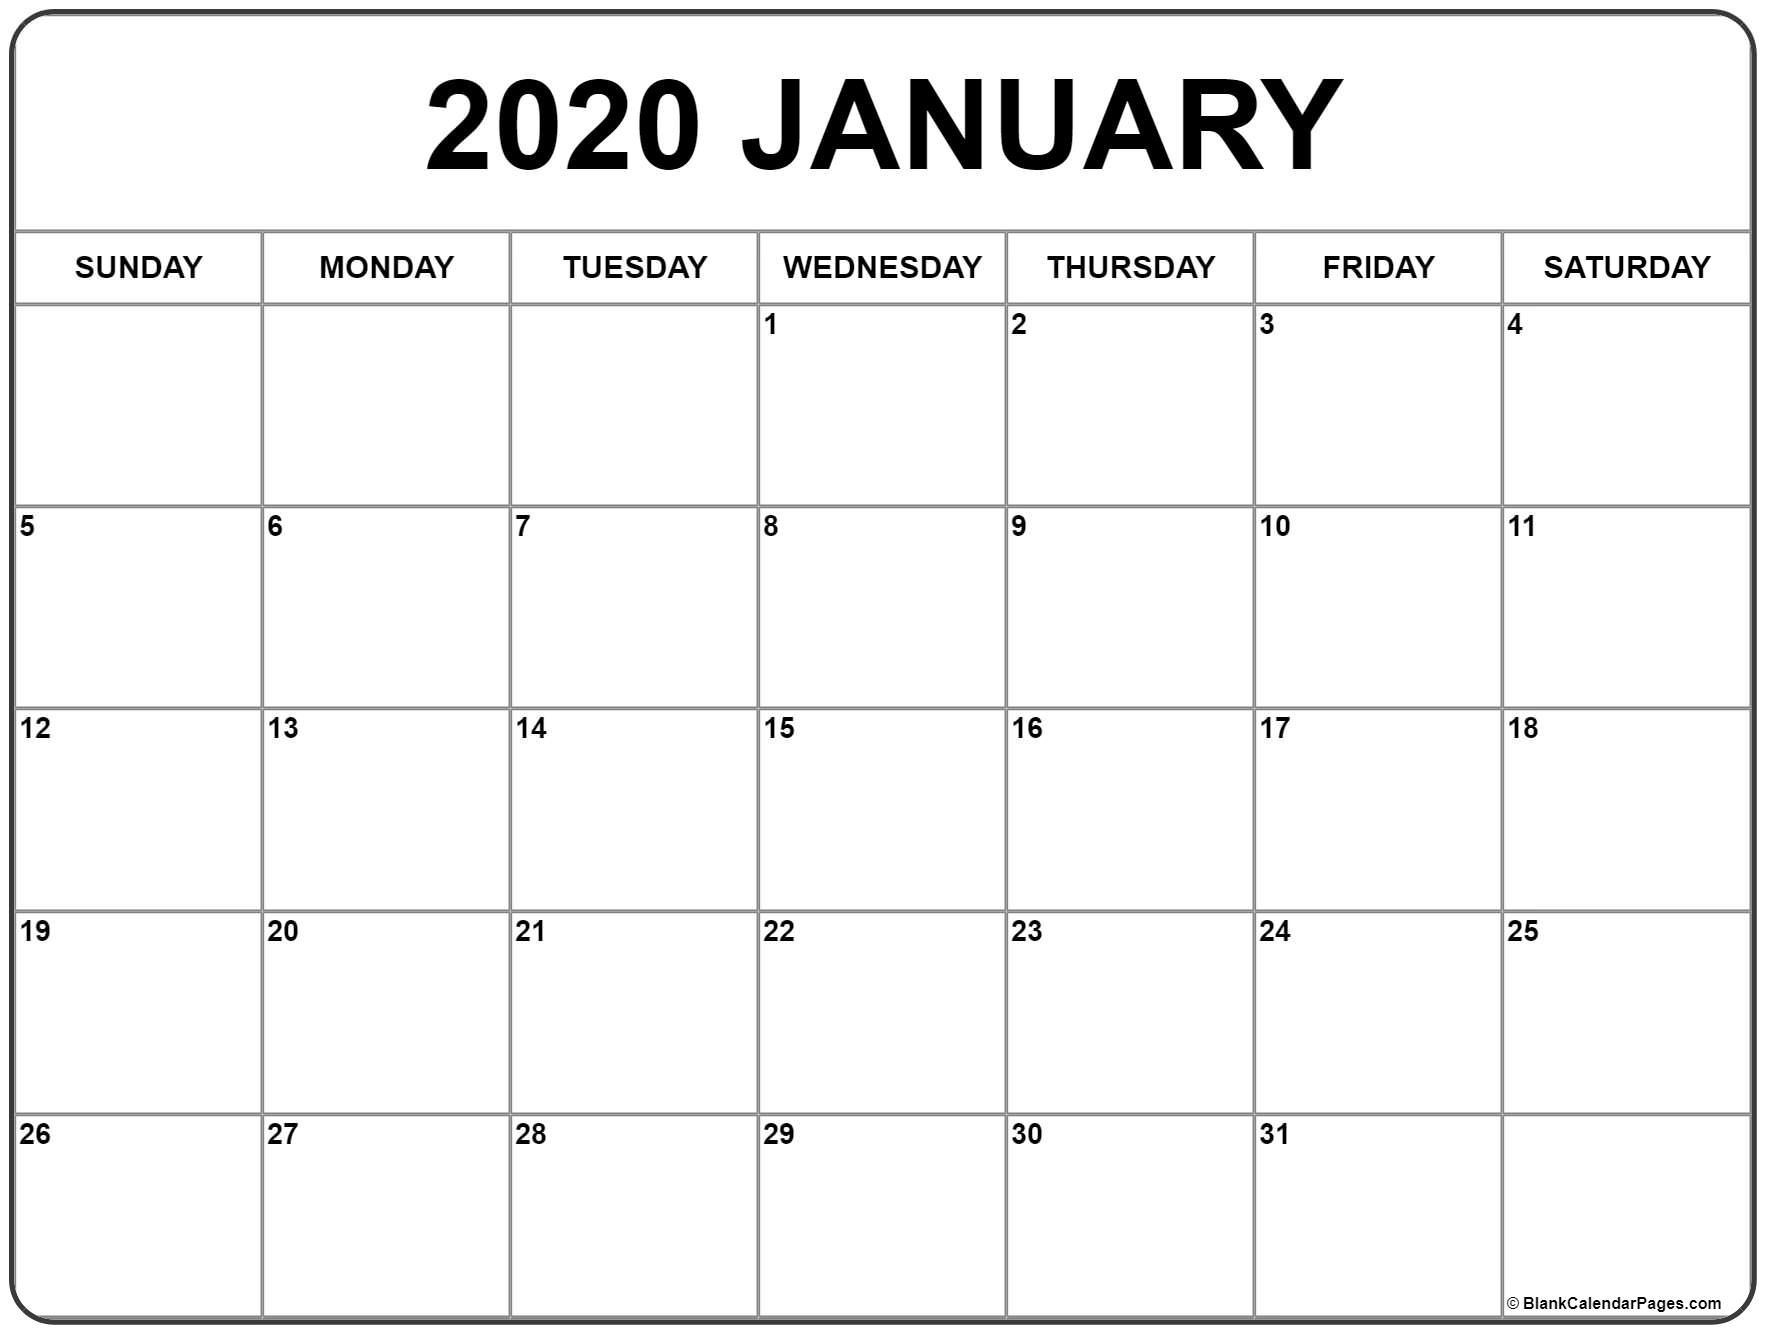 January 2020 Calendar | Free Printable Monthly Calendars-Free 2 Page Monthly Calendar 2020